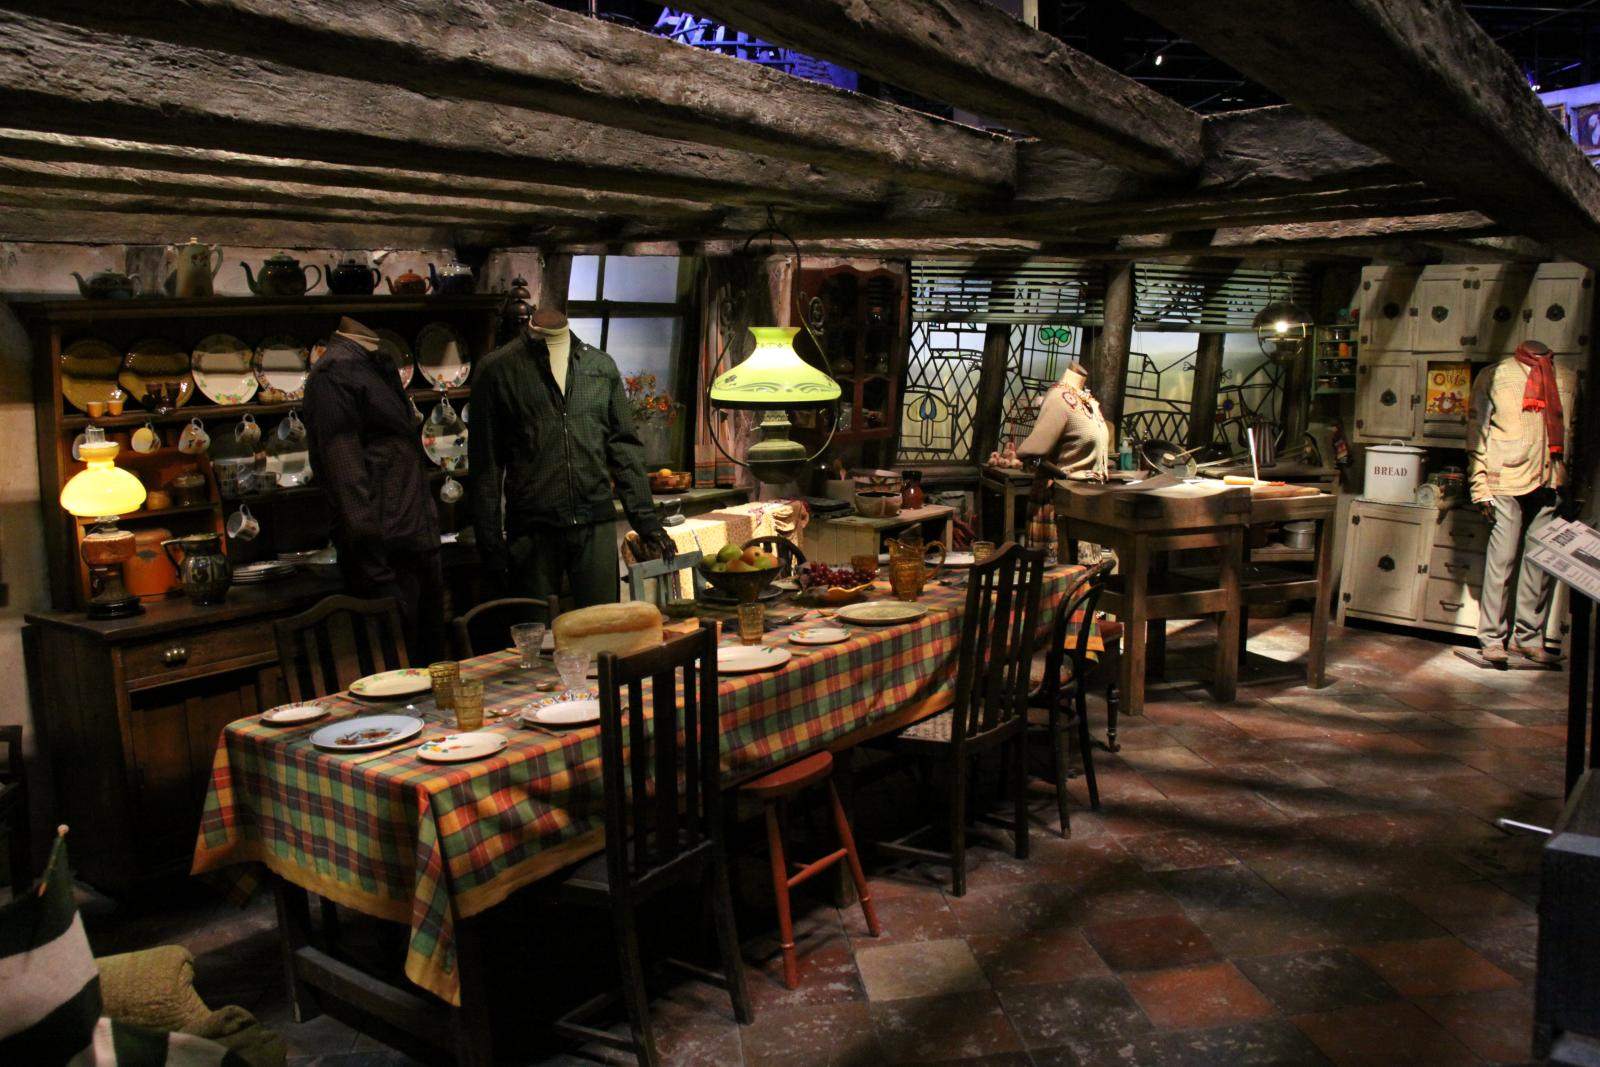 making harry potter14 The Making of Harry Potter, Warner Bros Studio London